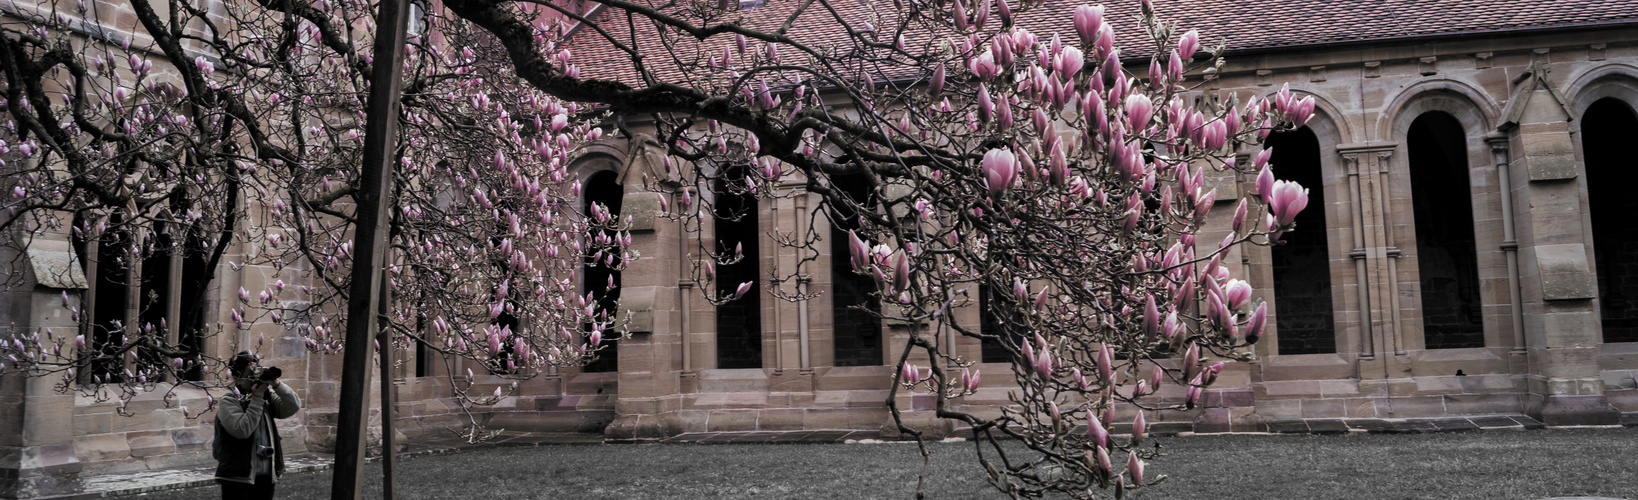 Magnolienblüte im Kloster Maulbronn im Fokus